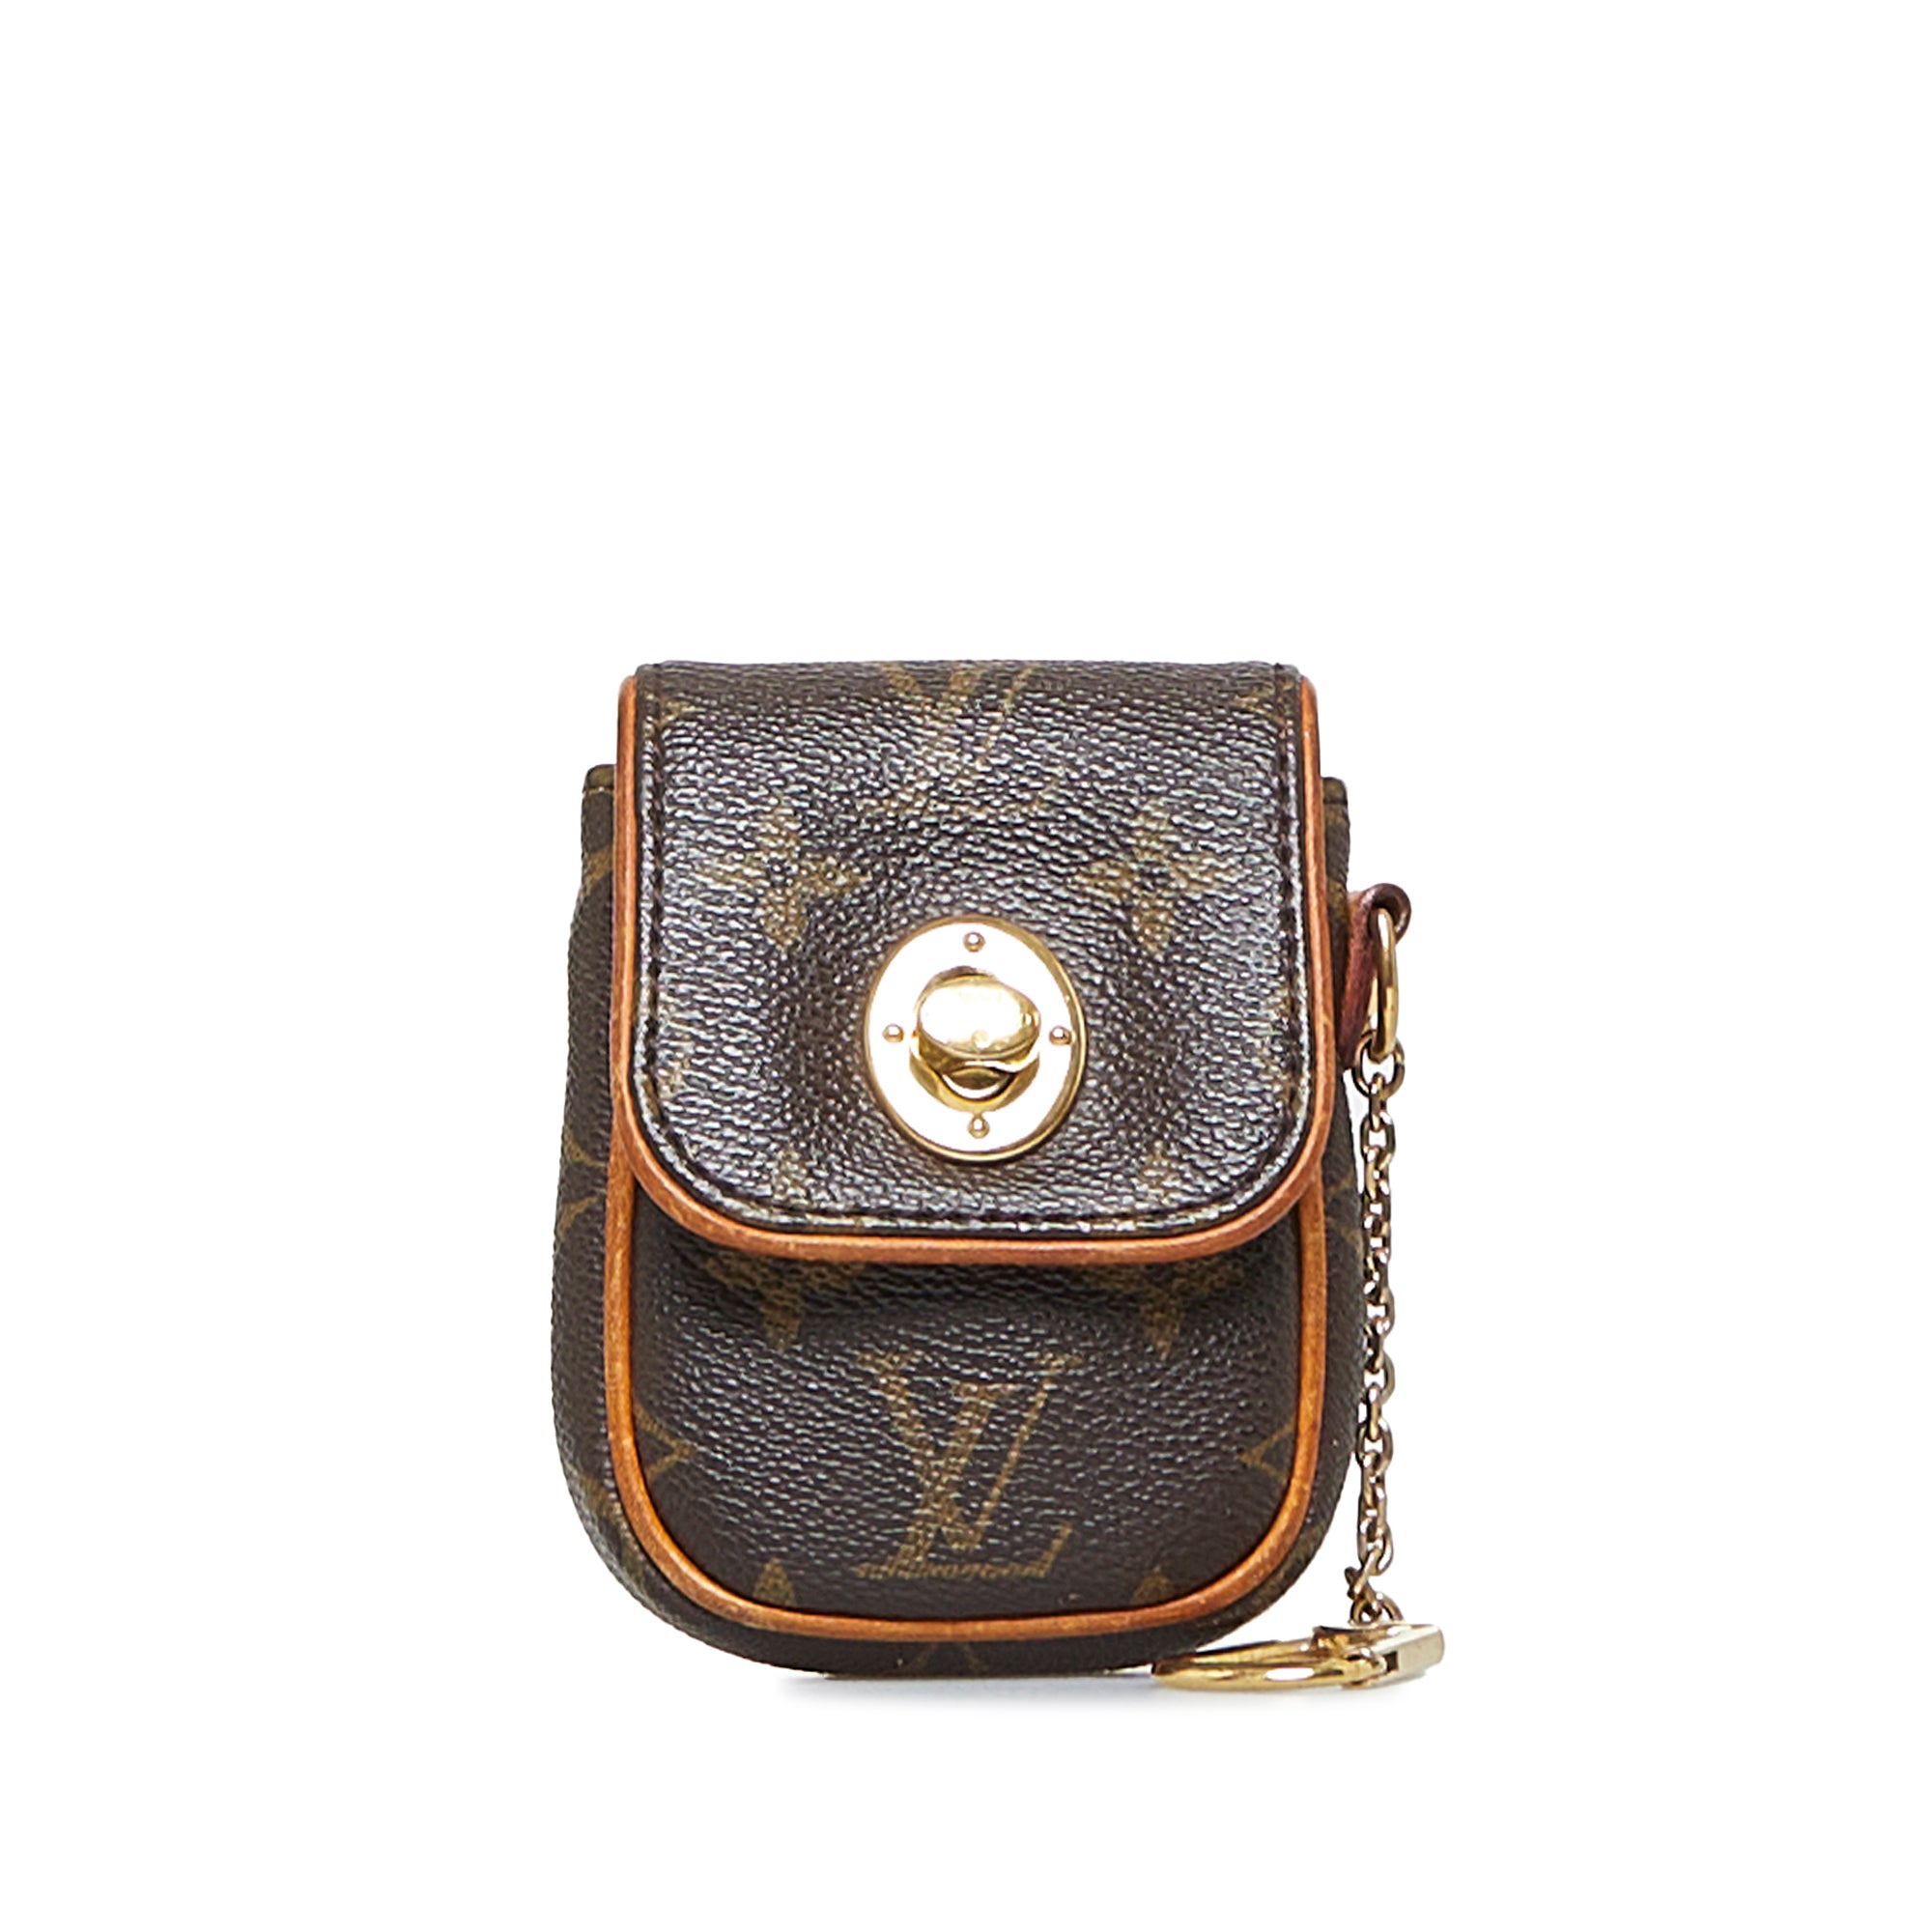 Louis Vuitton, a monogram canvas sunglasses case and a key holder